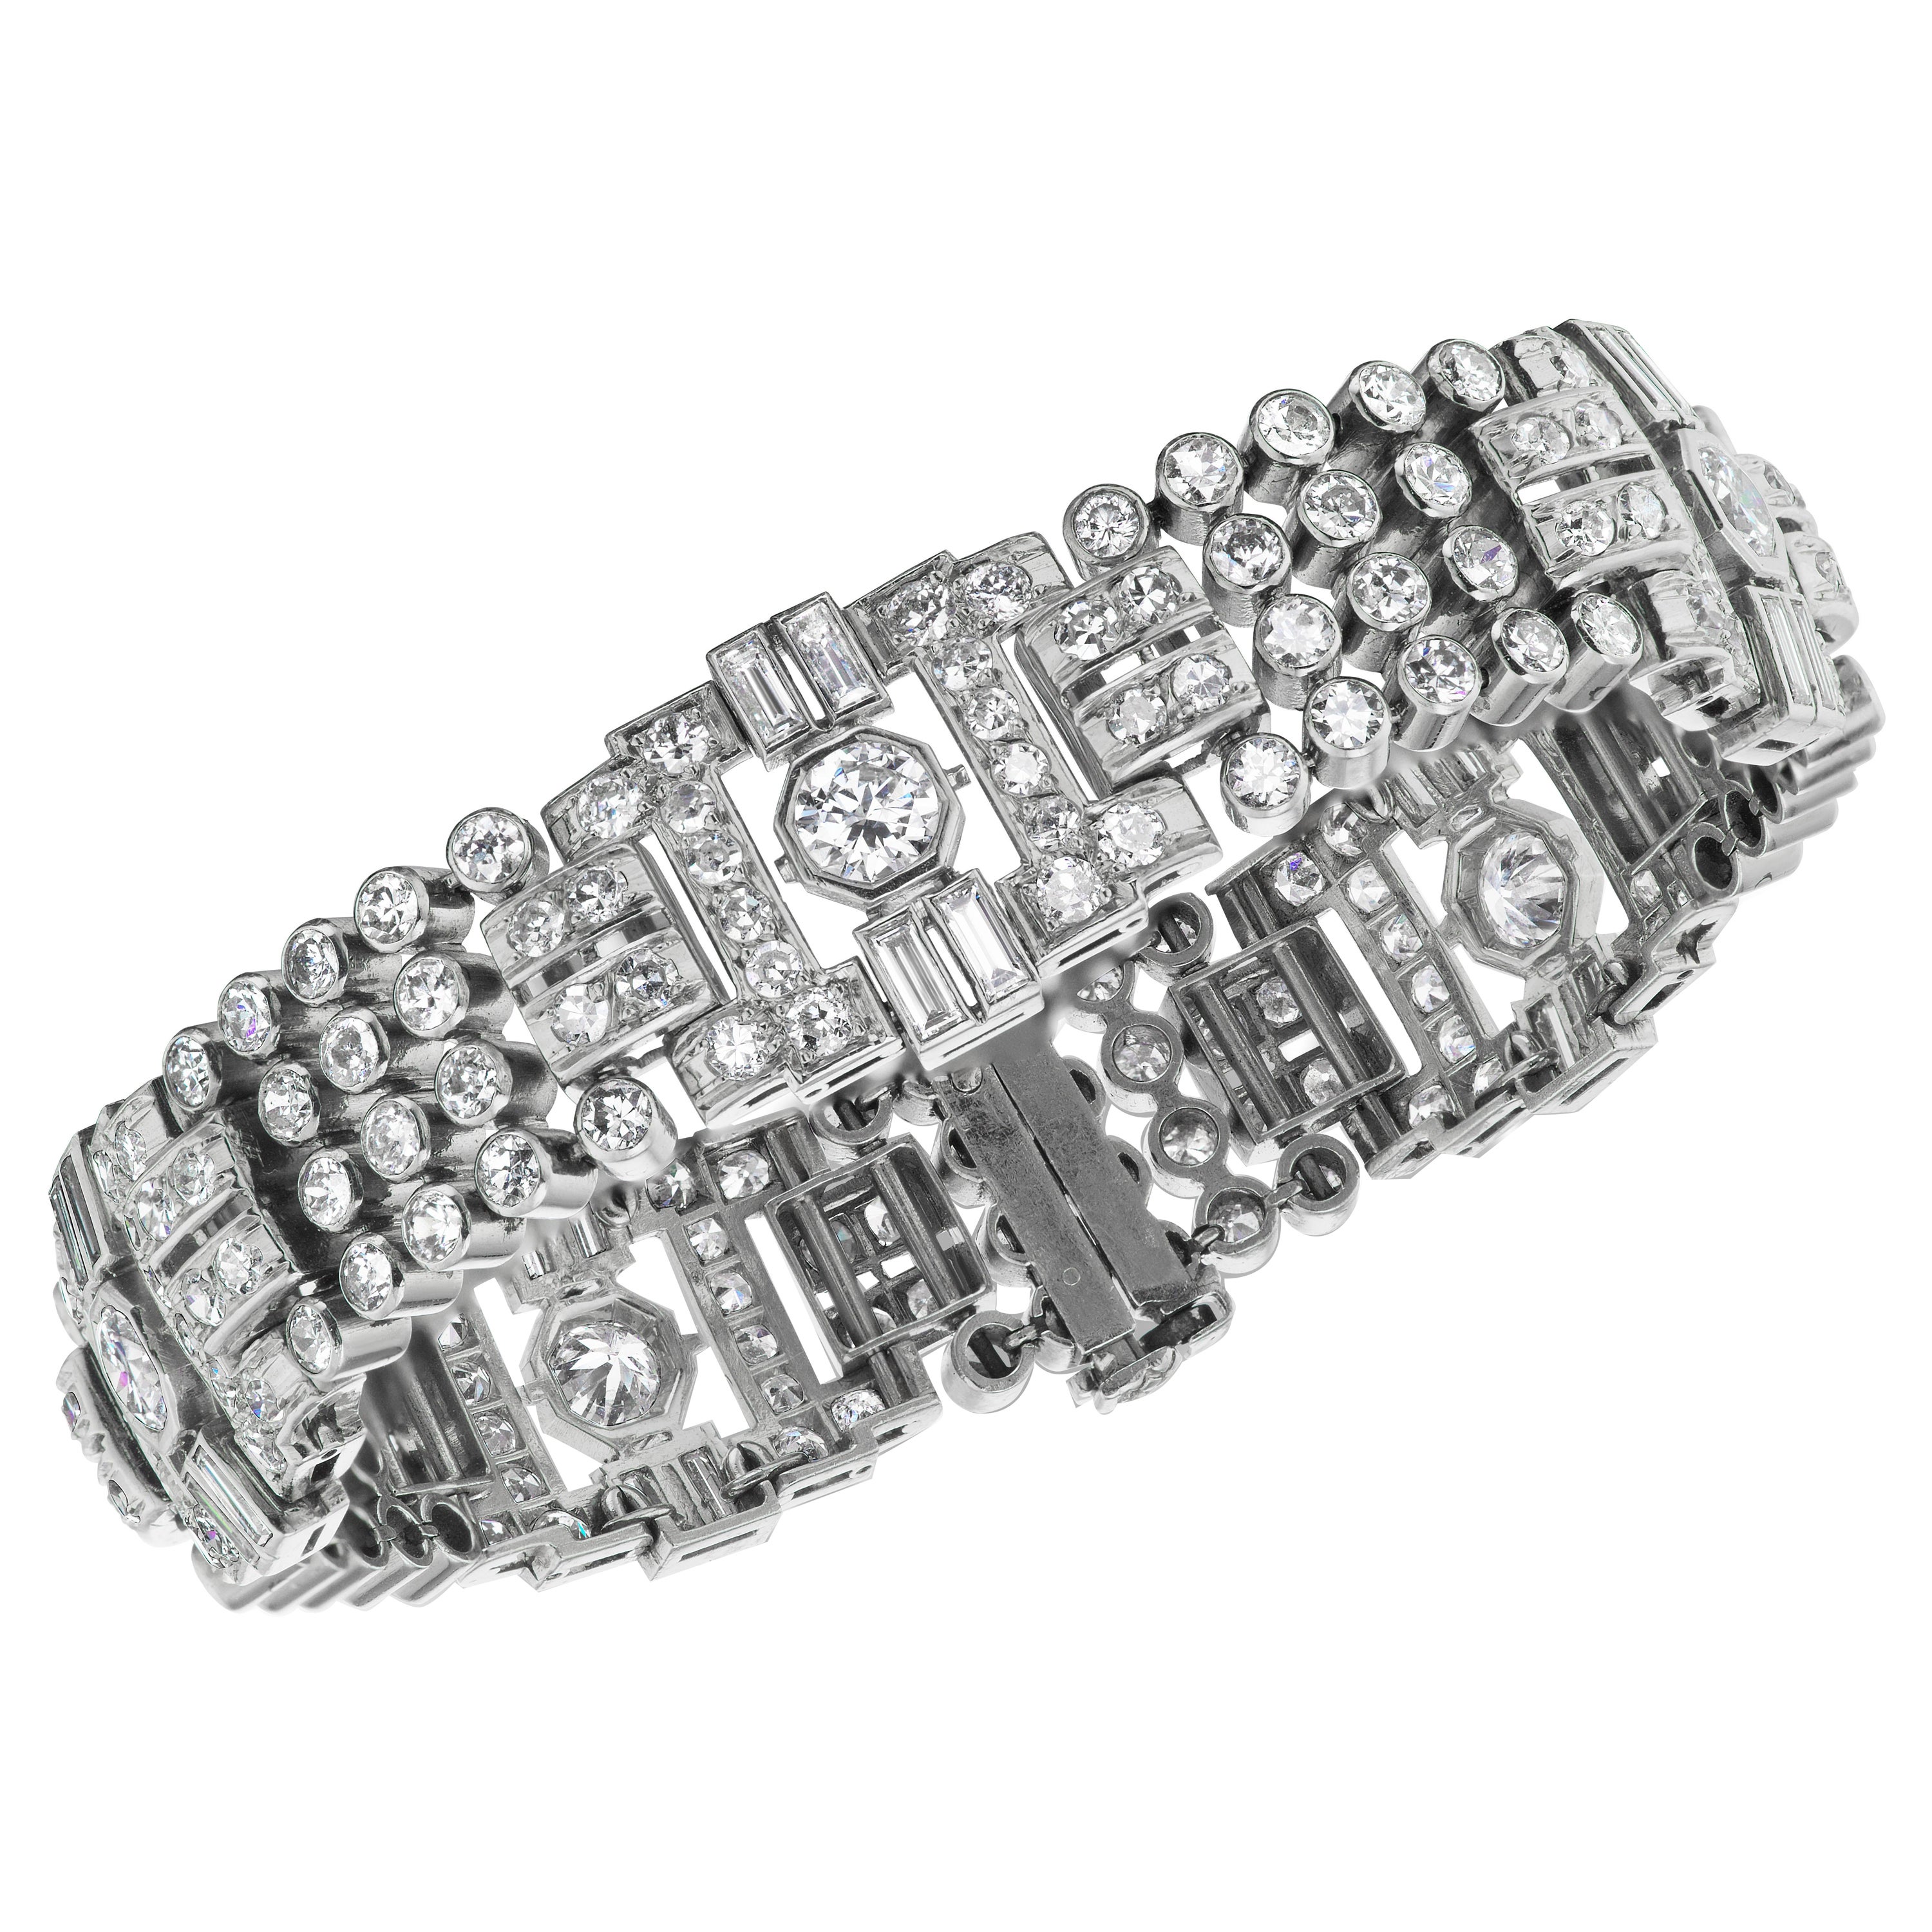 Art Deco Diamond and Platinum Link Bracelet